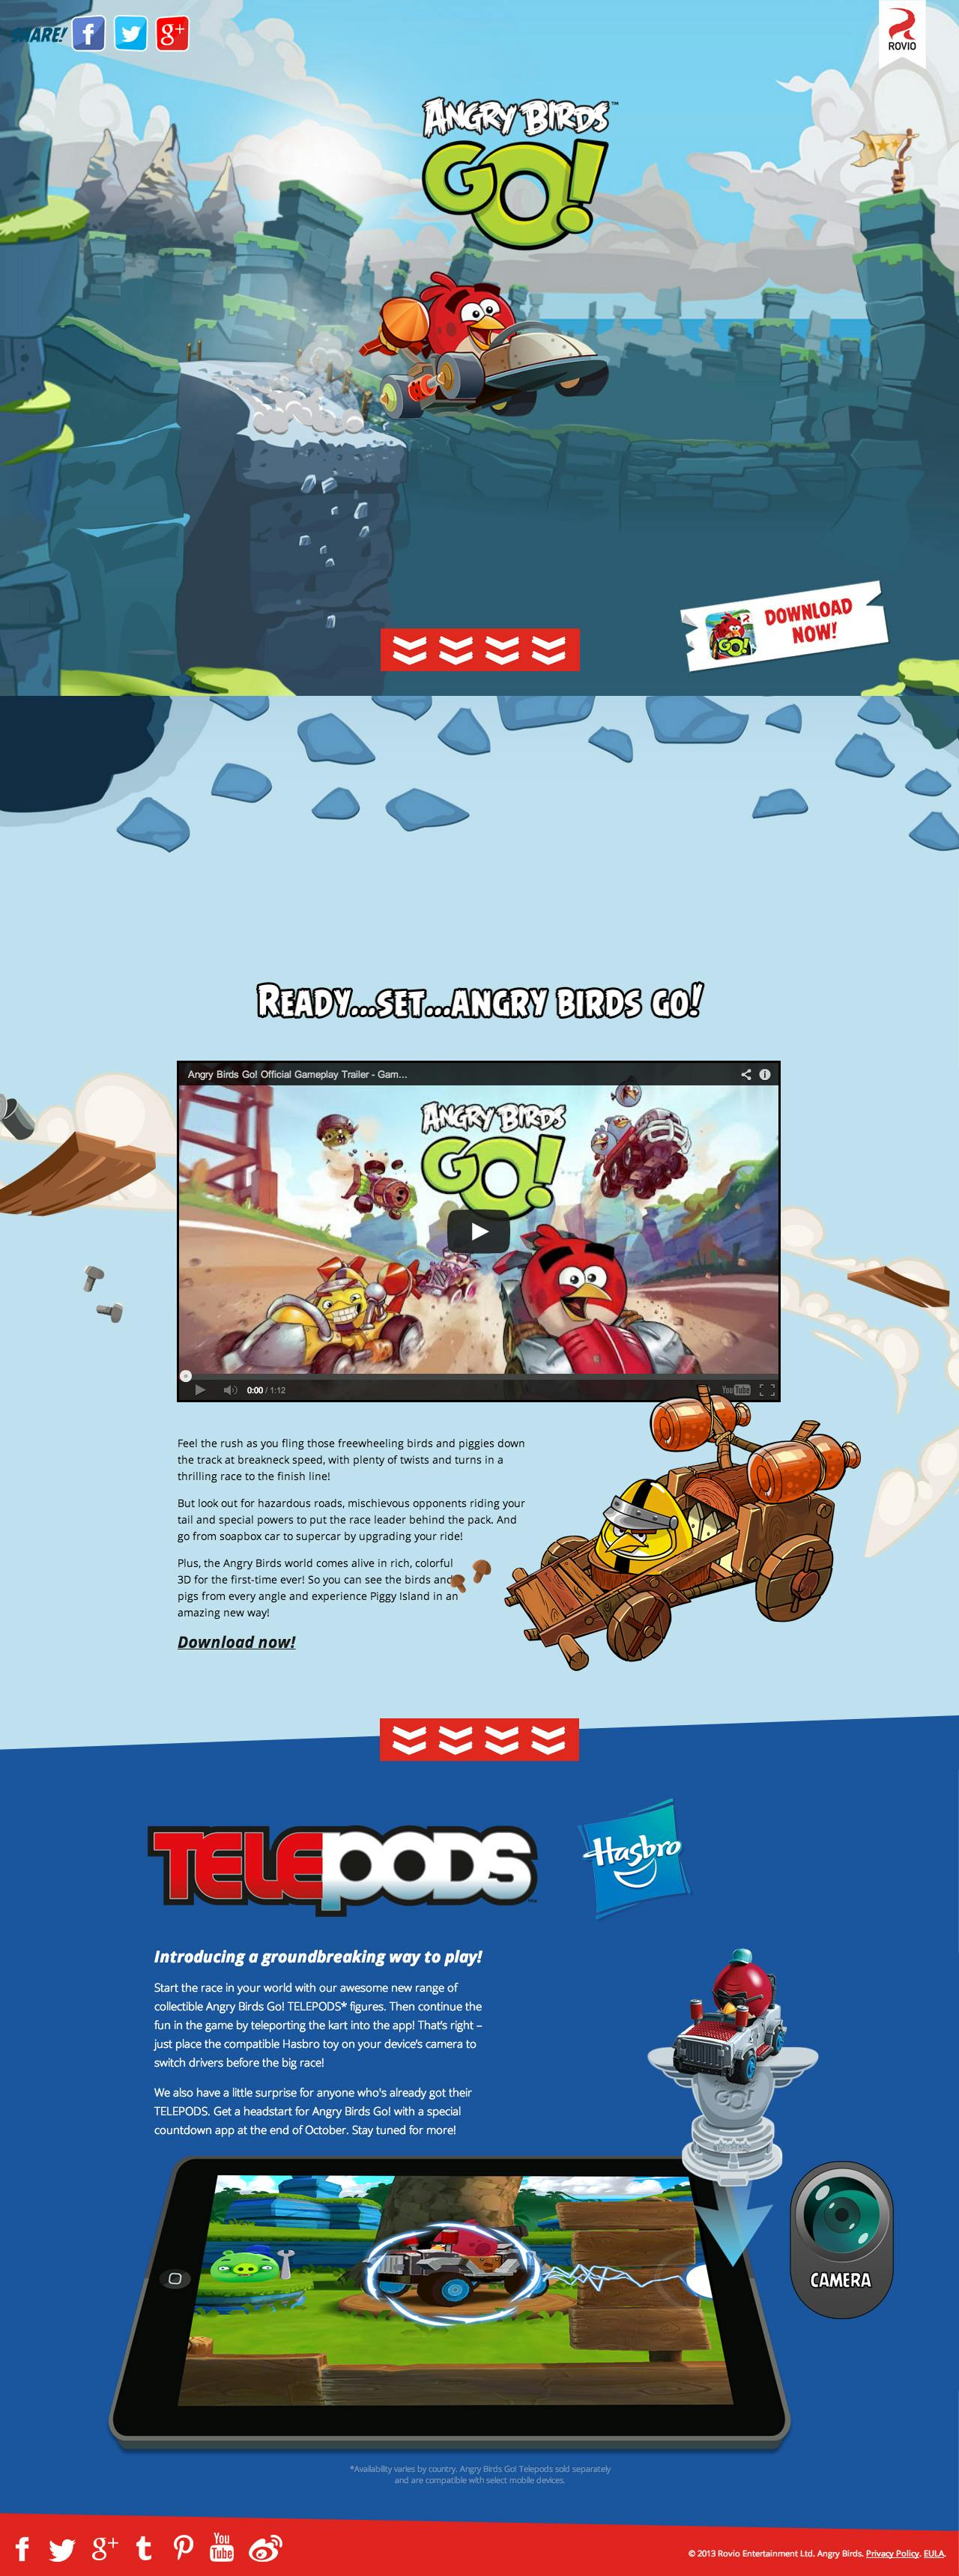 Angry Birds GO! Website Screenshot